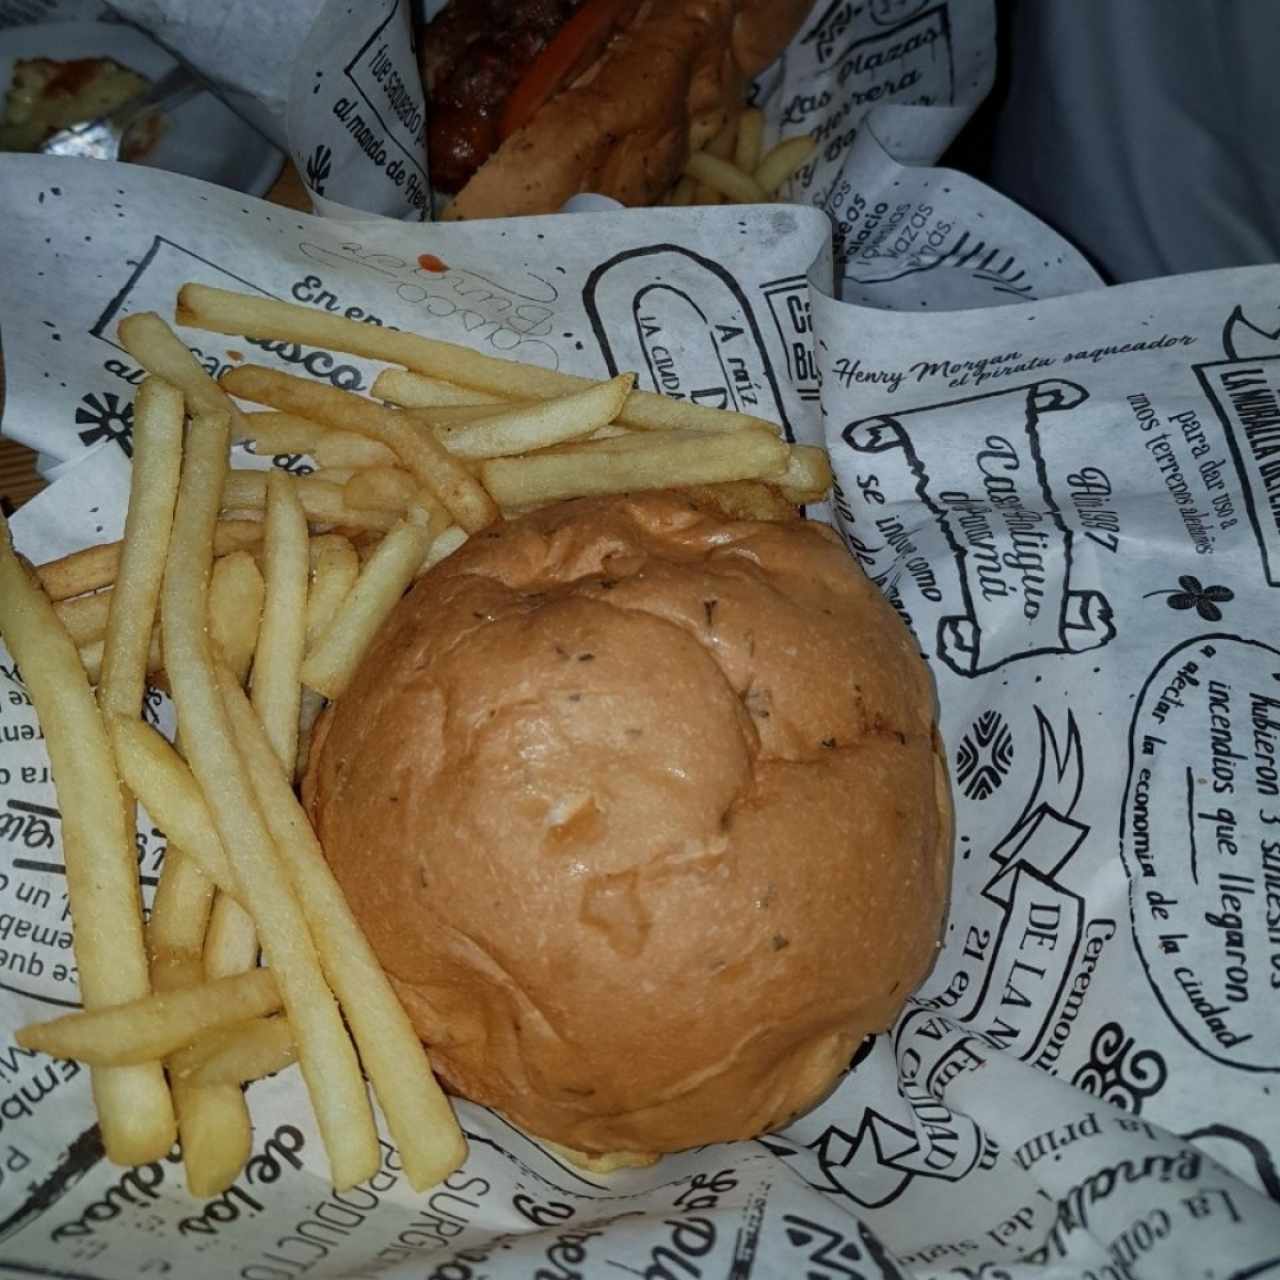 Central Burger